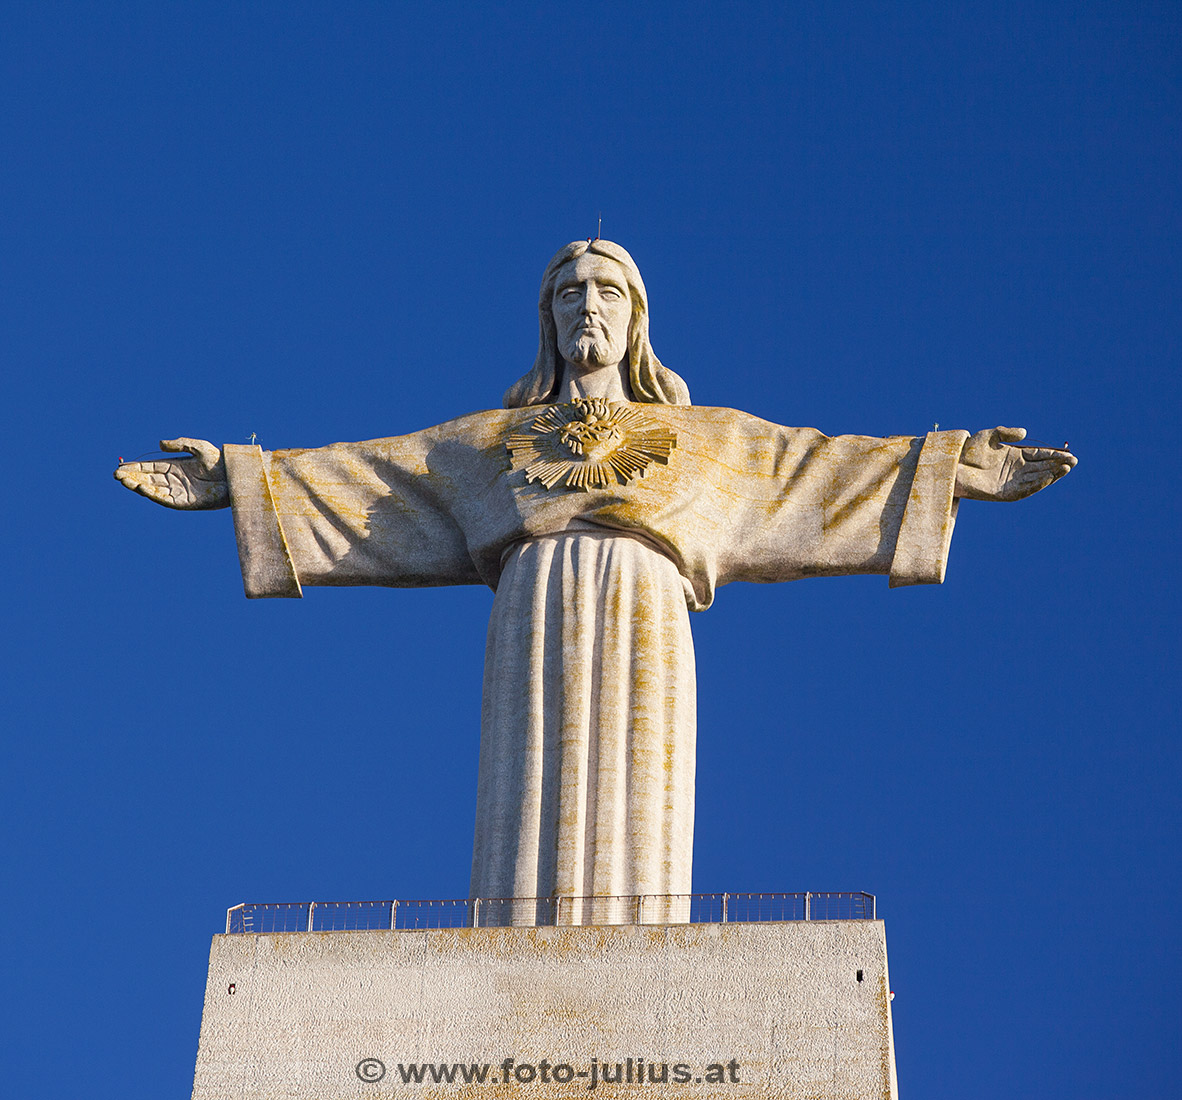 001a_Lisboa_Lissabon_Cristo_Rei_Statue.jpg, 299kB